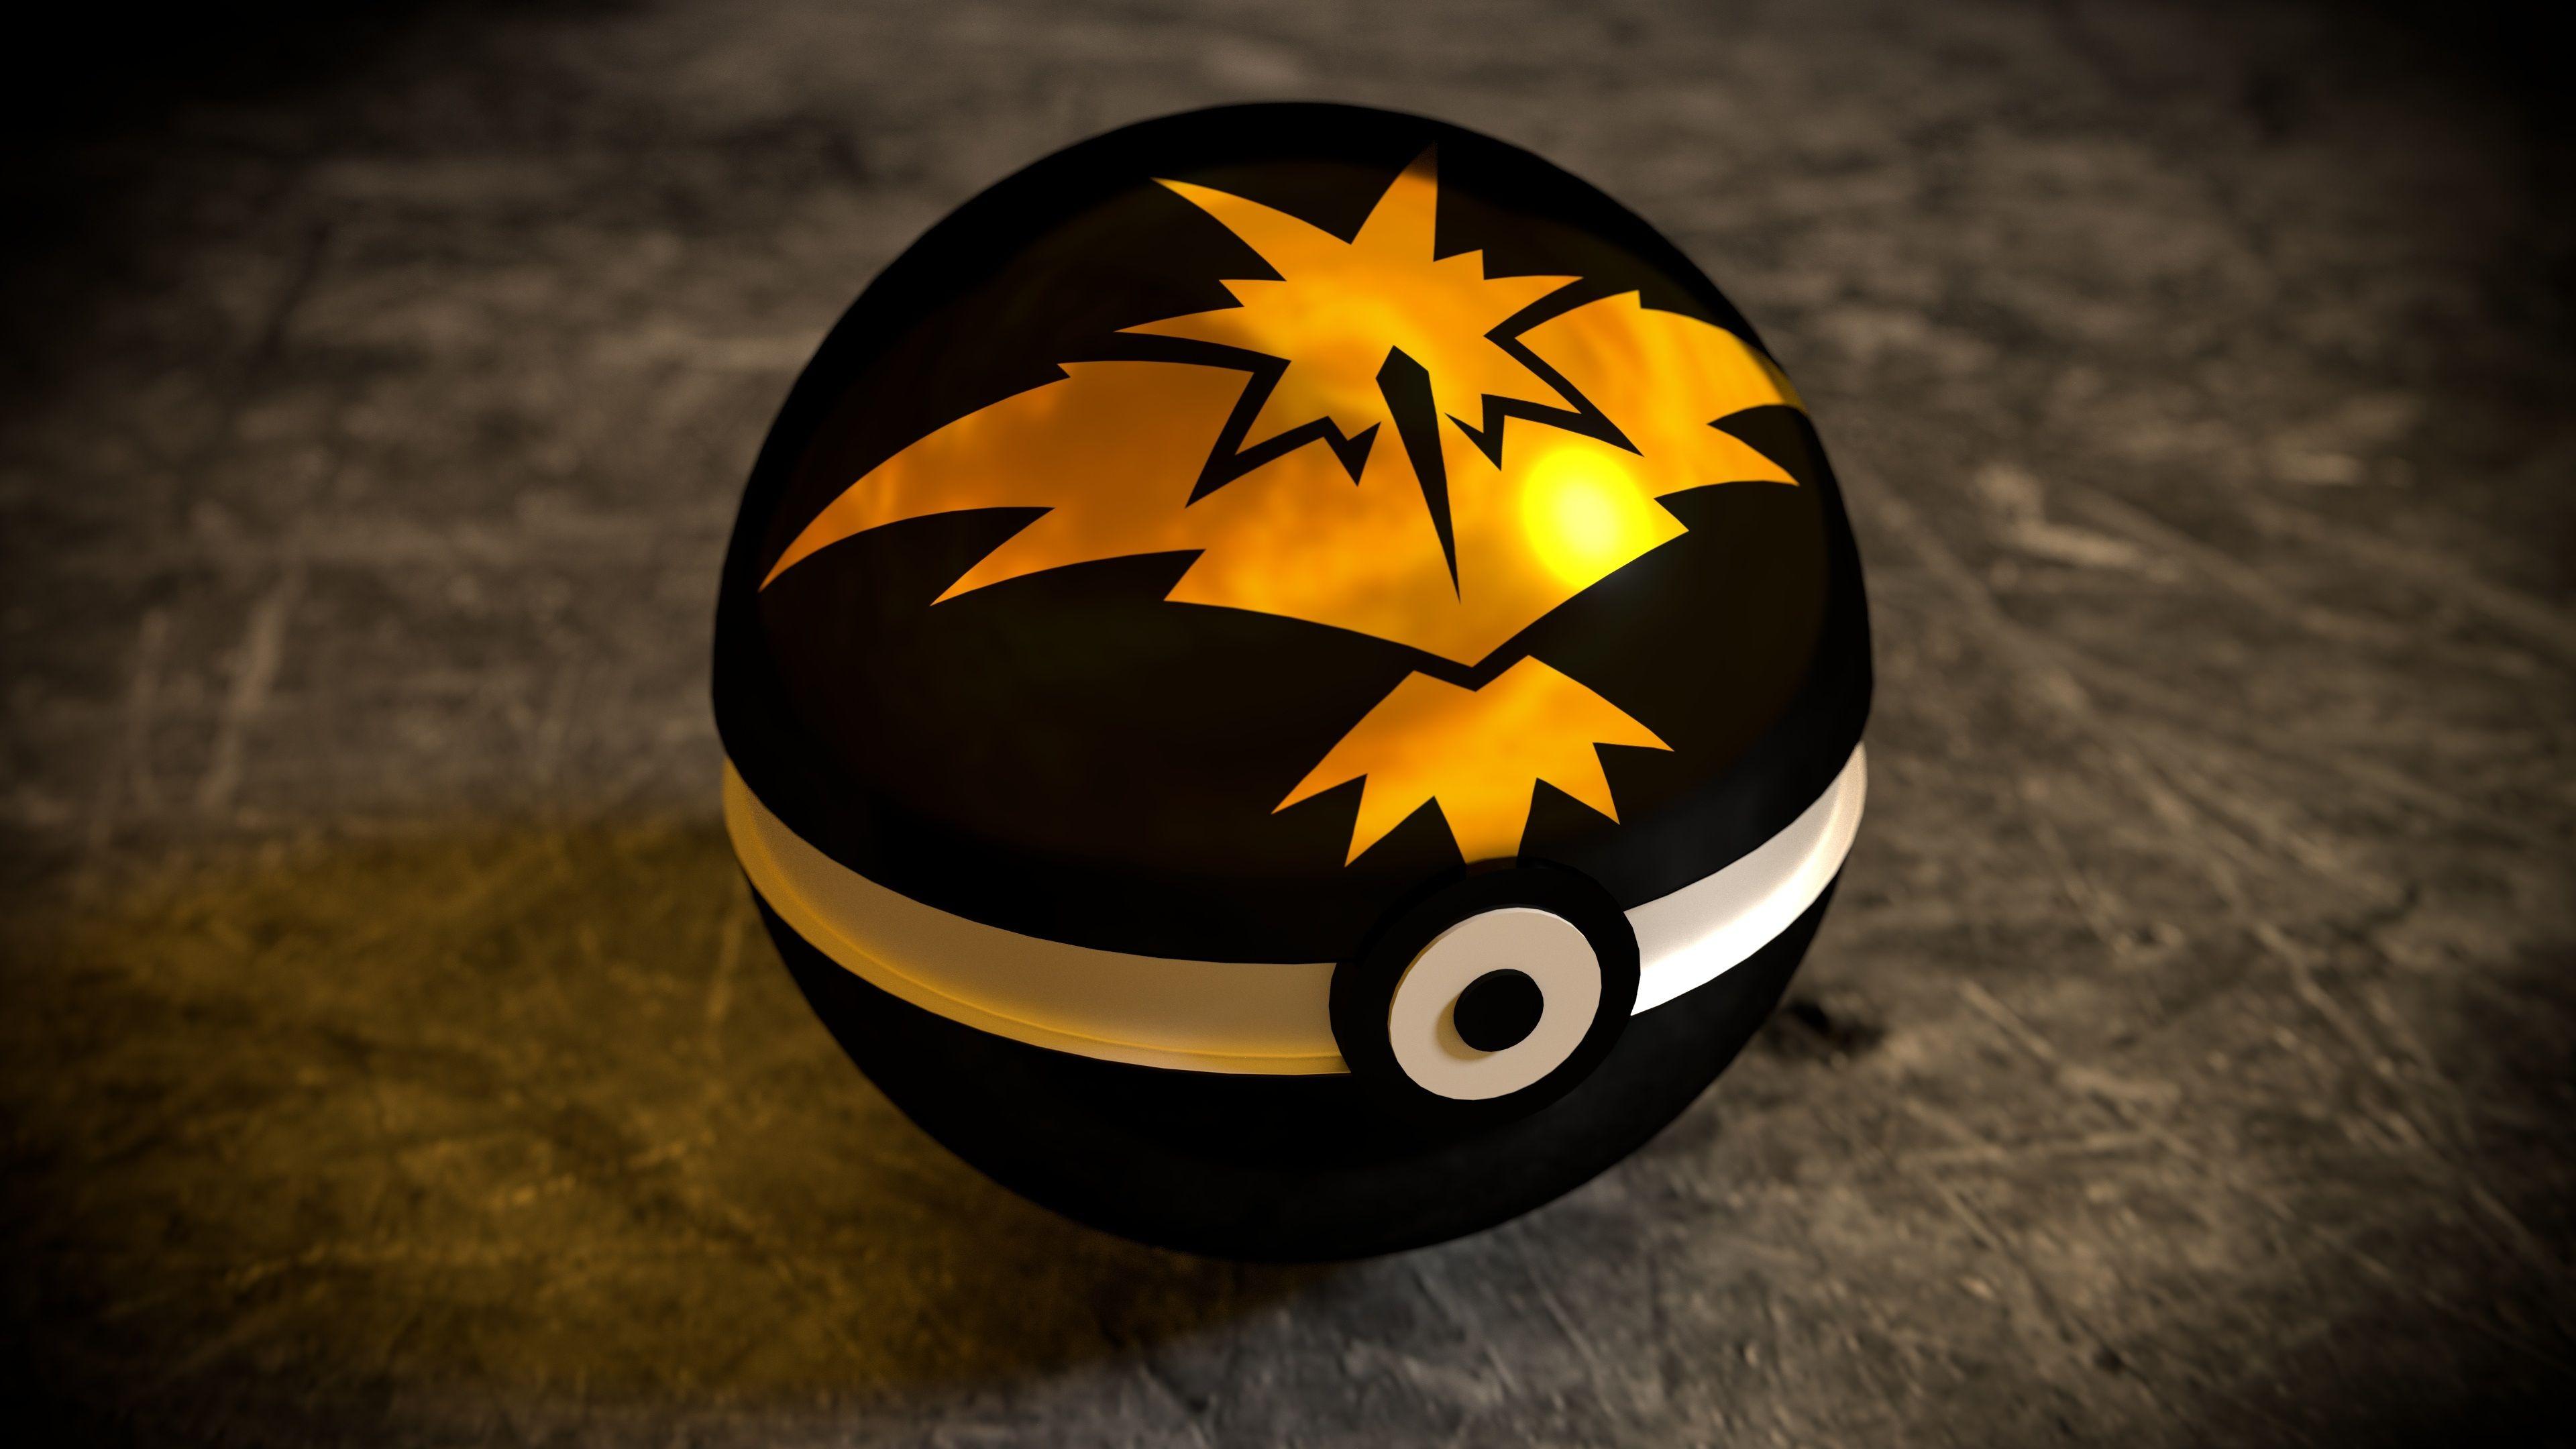 Brown and Yellow Team Logo - Wallpaper Pokeball, Pokemon GO, Team Yellow, Team Instinct, 4K